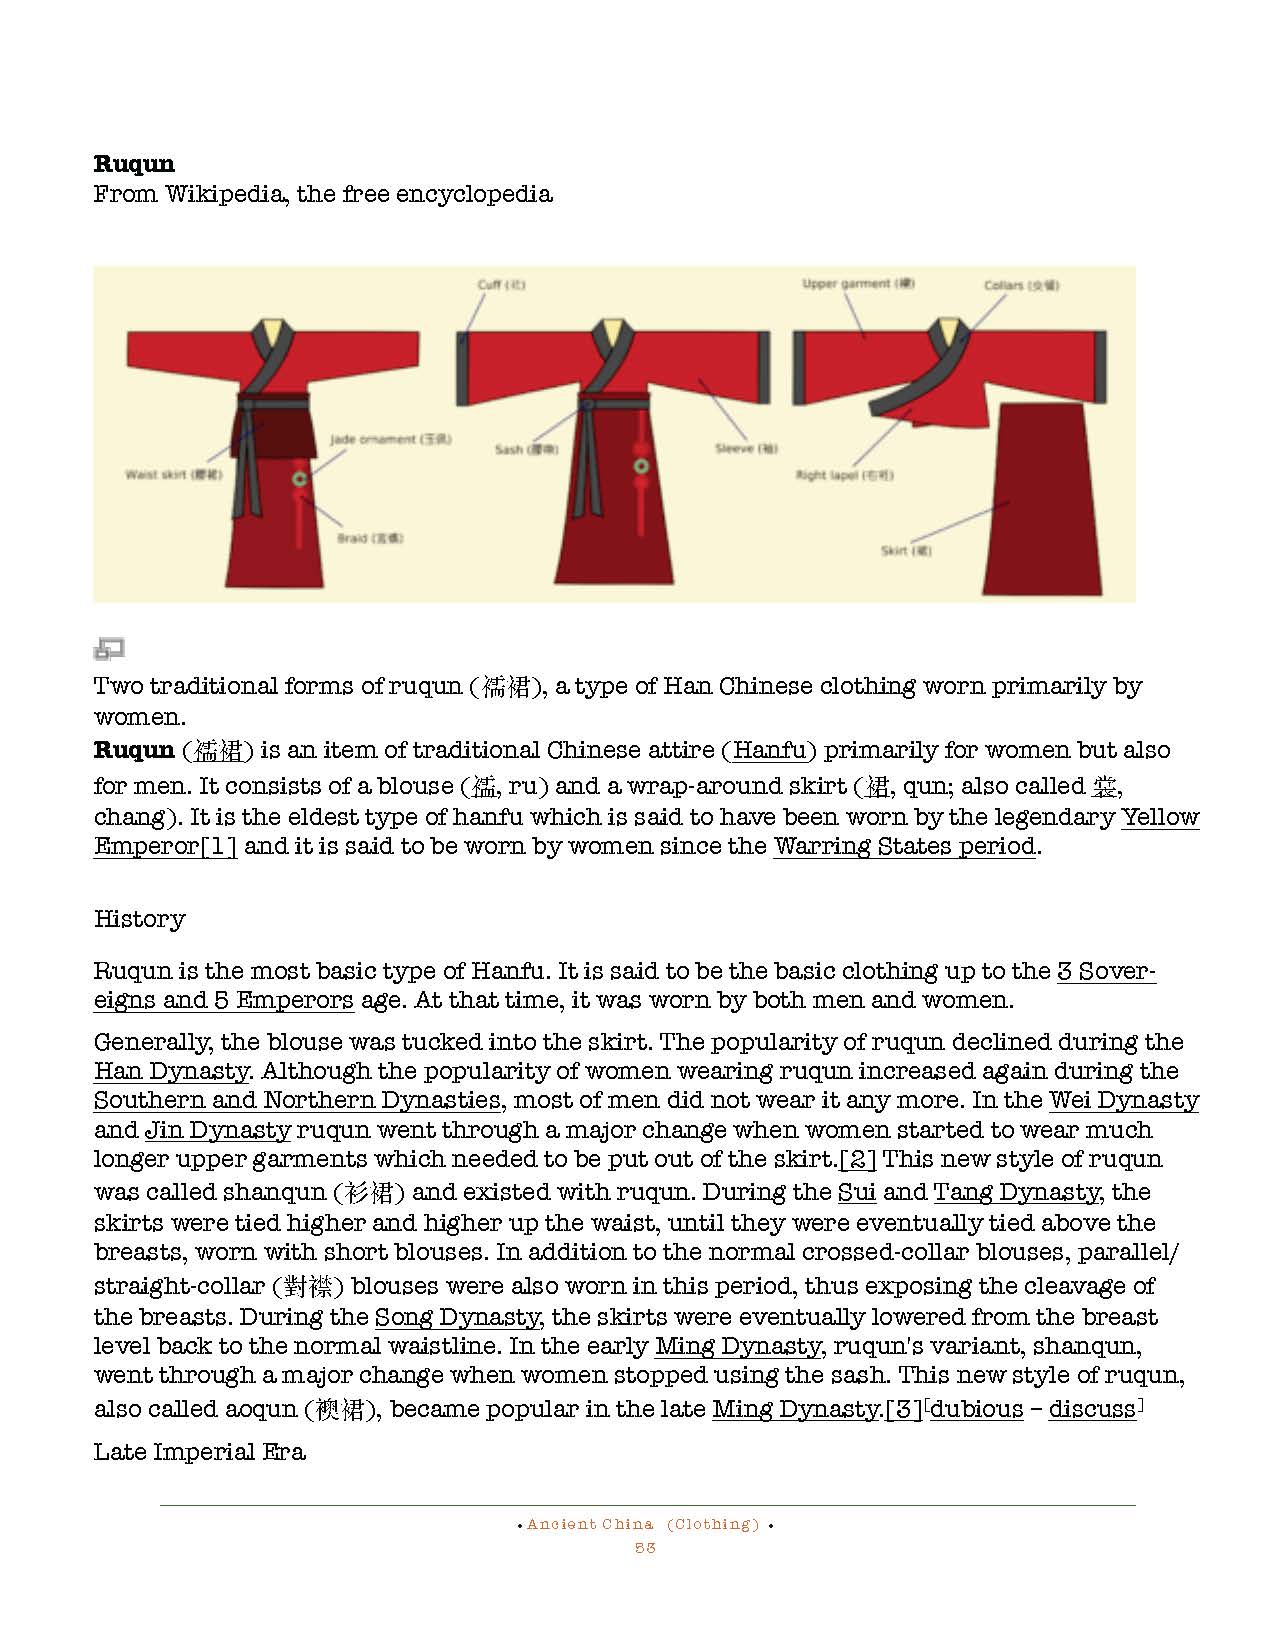 HOCE- Ancient China Notes (clothing)_Page_53.jpg